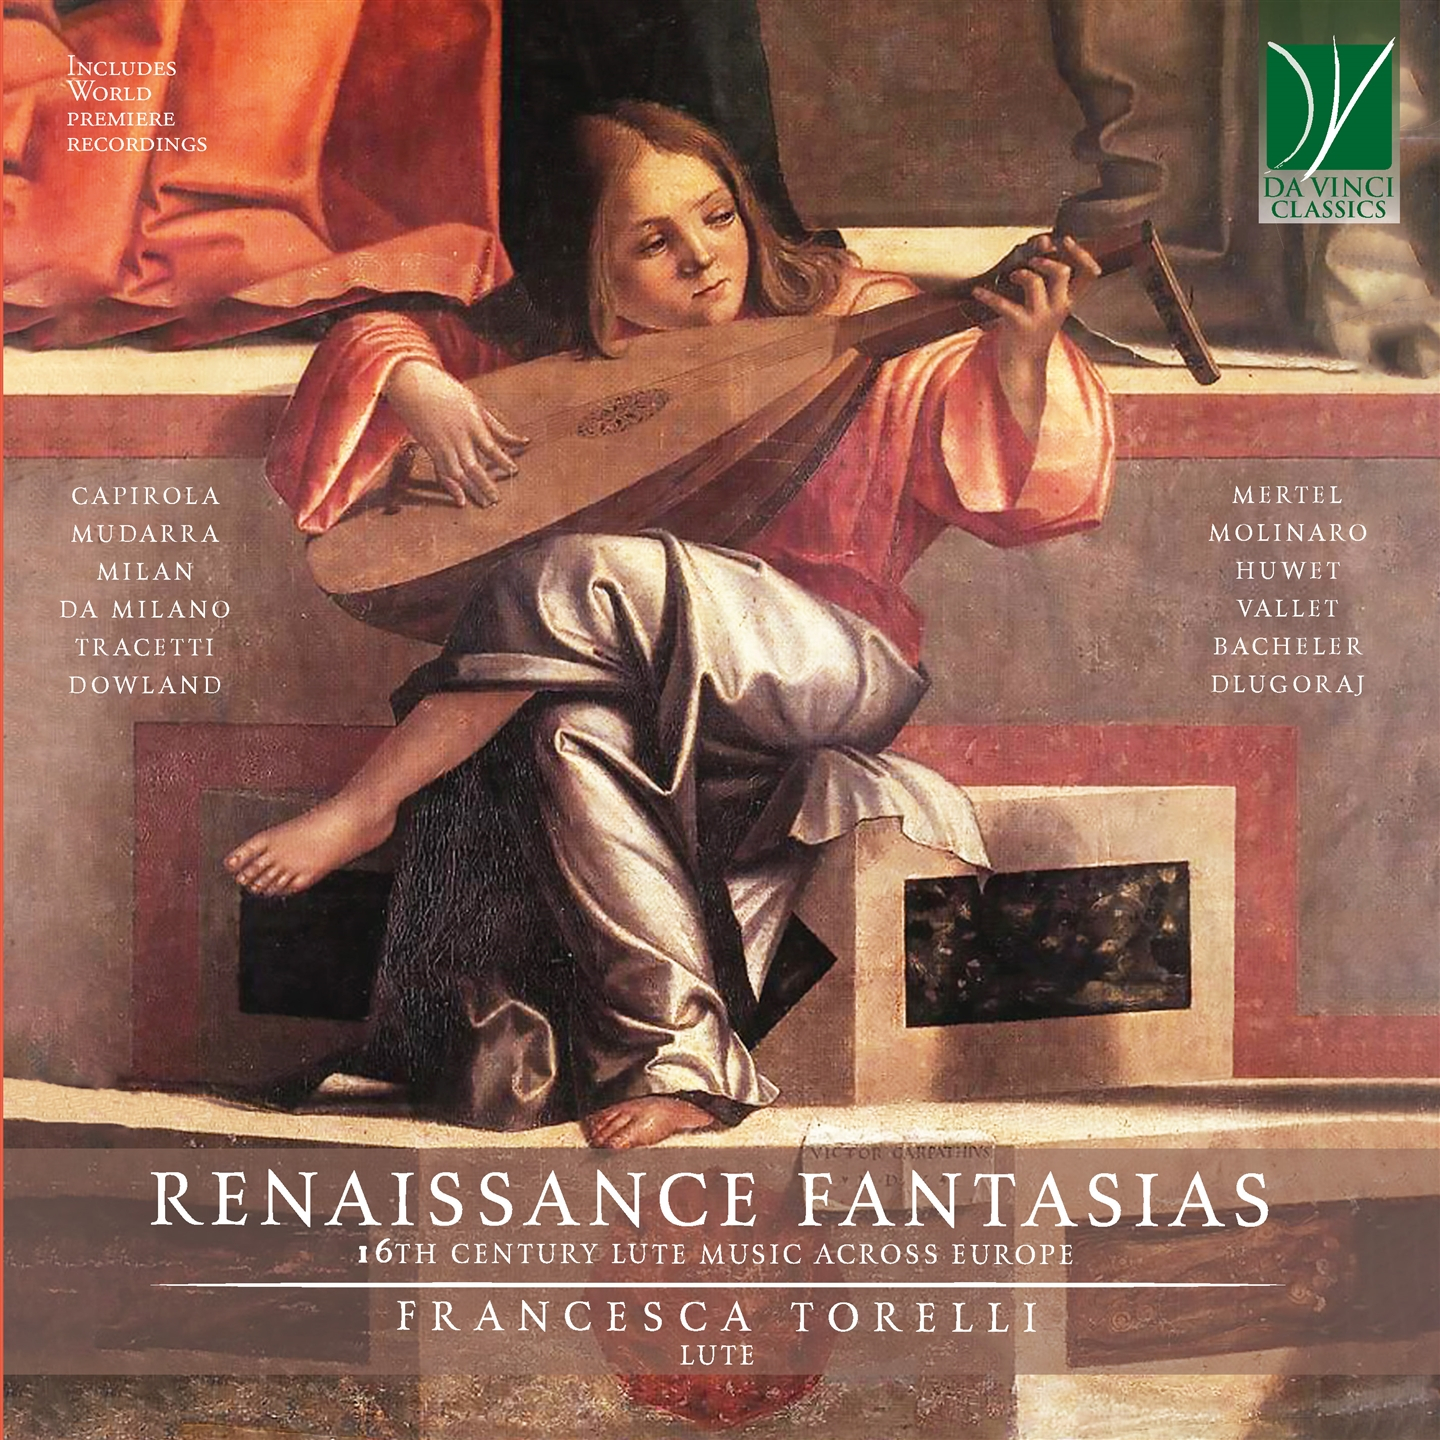 RENAISSANCE FANTASIAS - 16TH CENTURY LUTE MUSIC ACROSS EUROPE